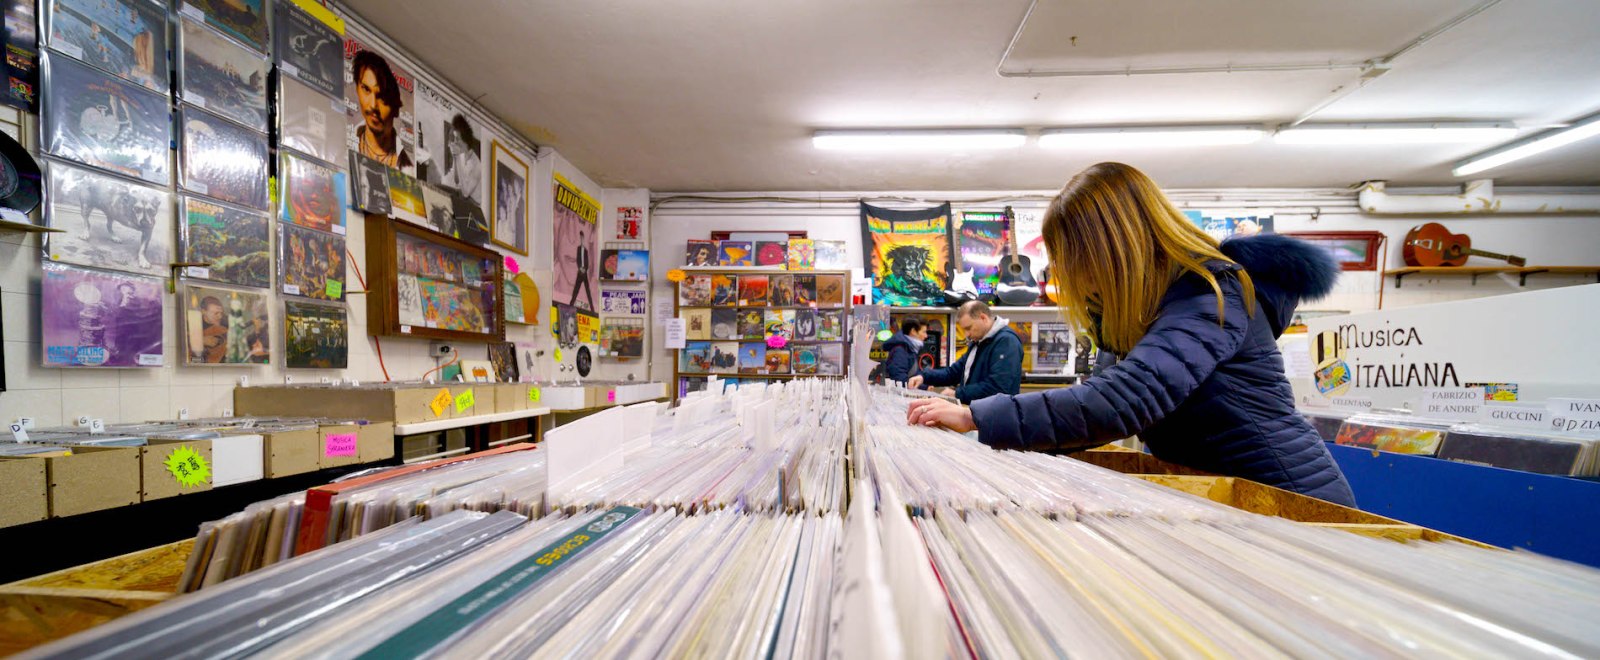 vinyl-record-store-Davide-Gabino-flickr-full.jpg